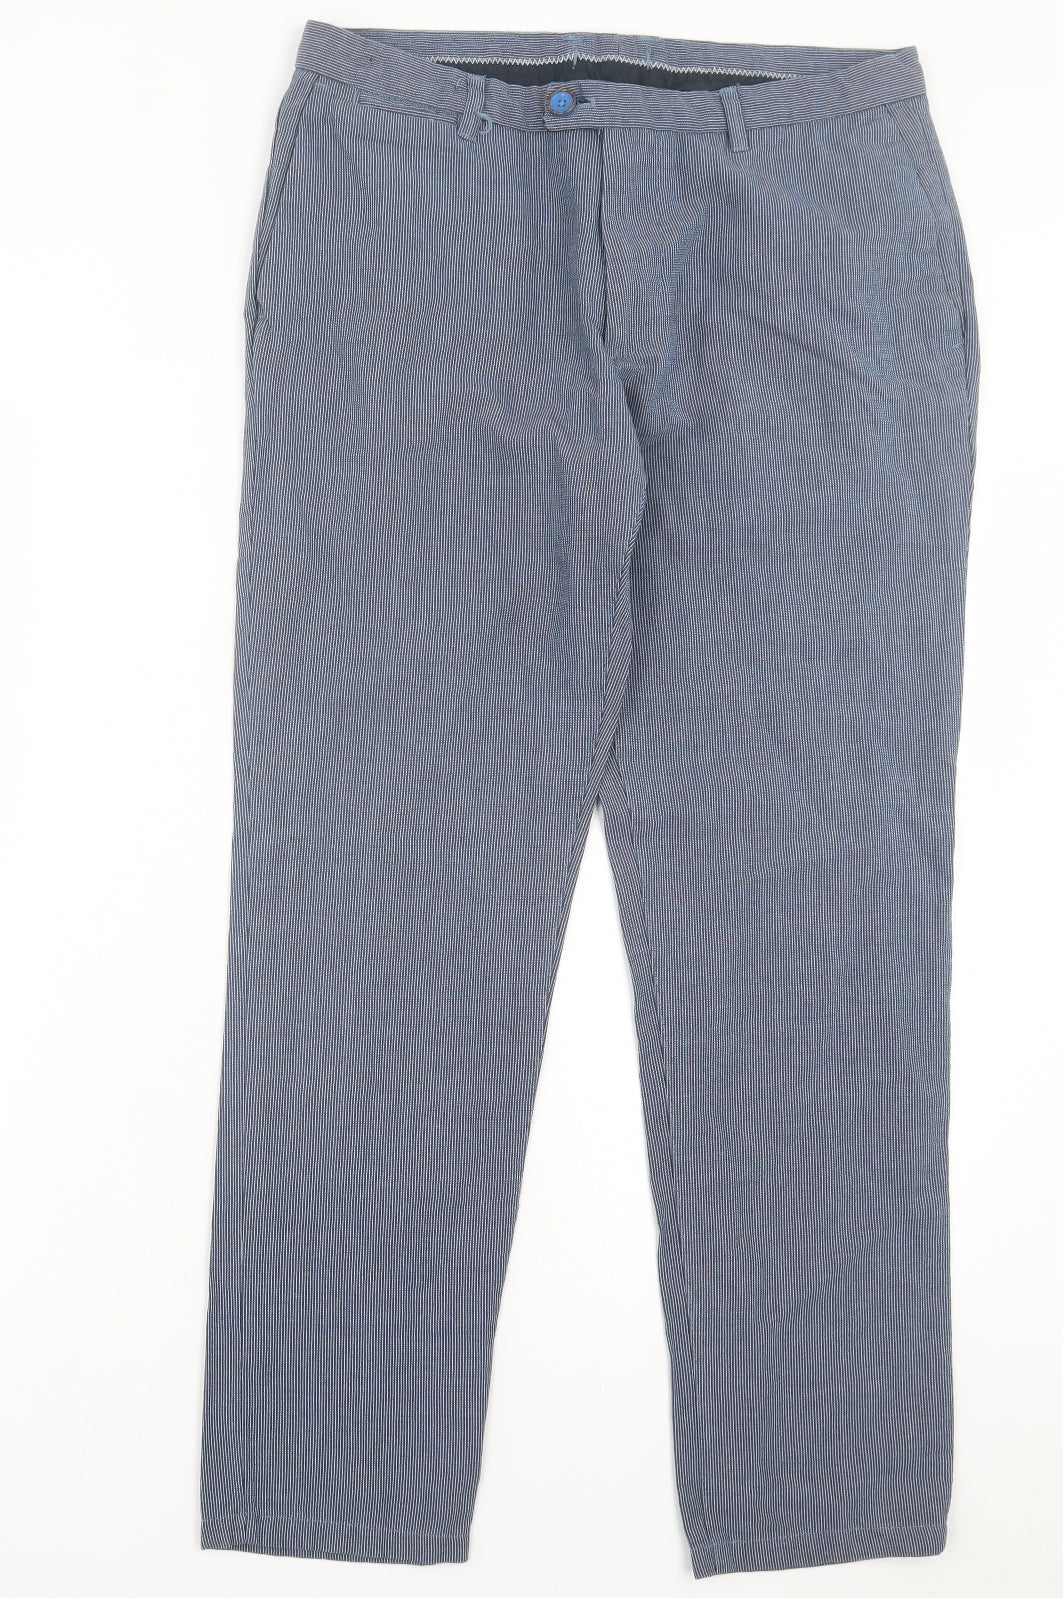 Revolution Mens Blue Striped Cotton Trousers Size 30 in L29 in Regular Button